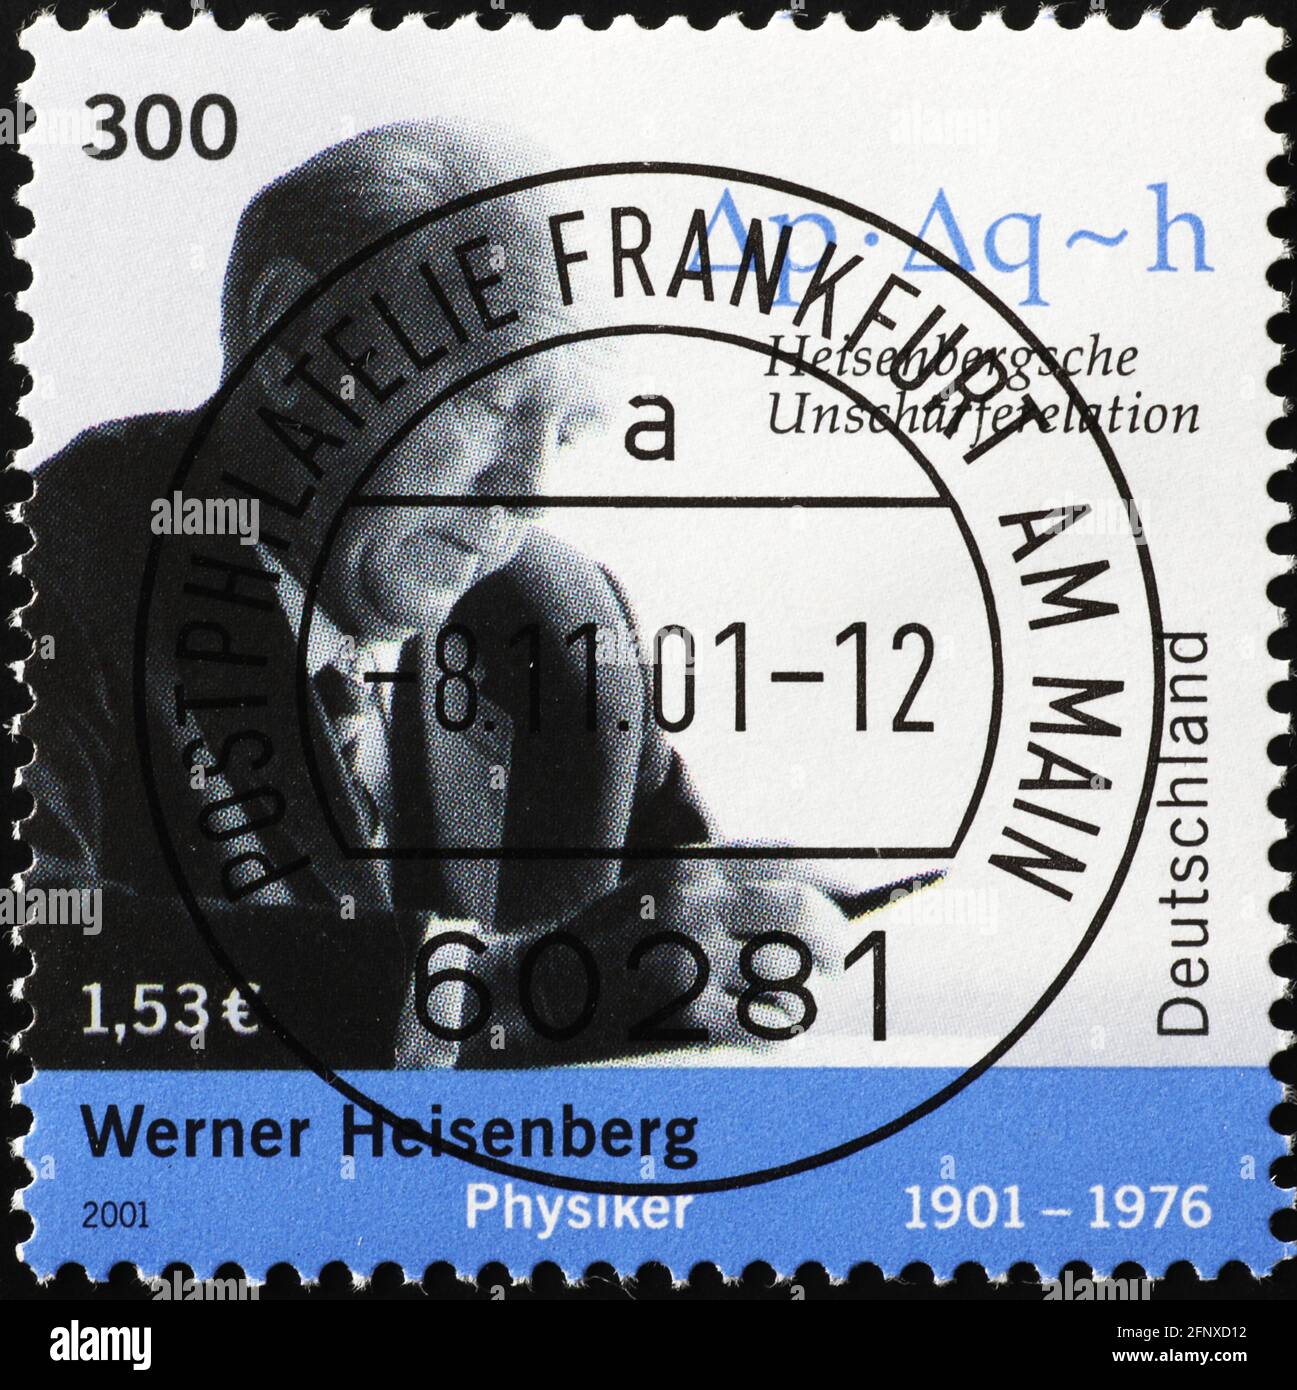 Werner Heisenberg portrait on german postage stamp Stock Photo